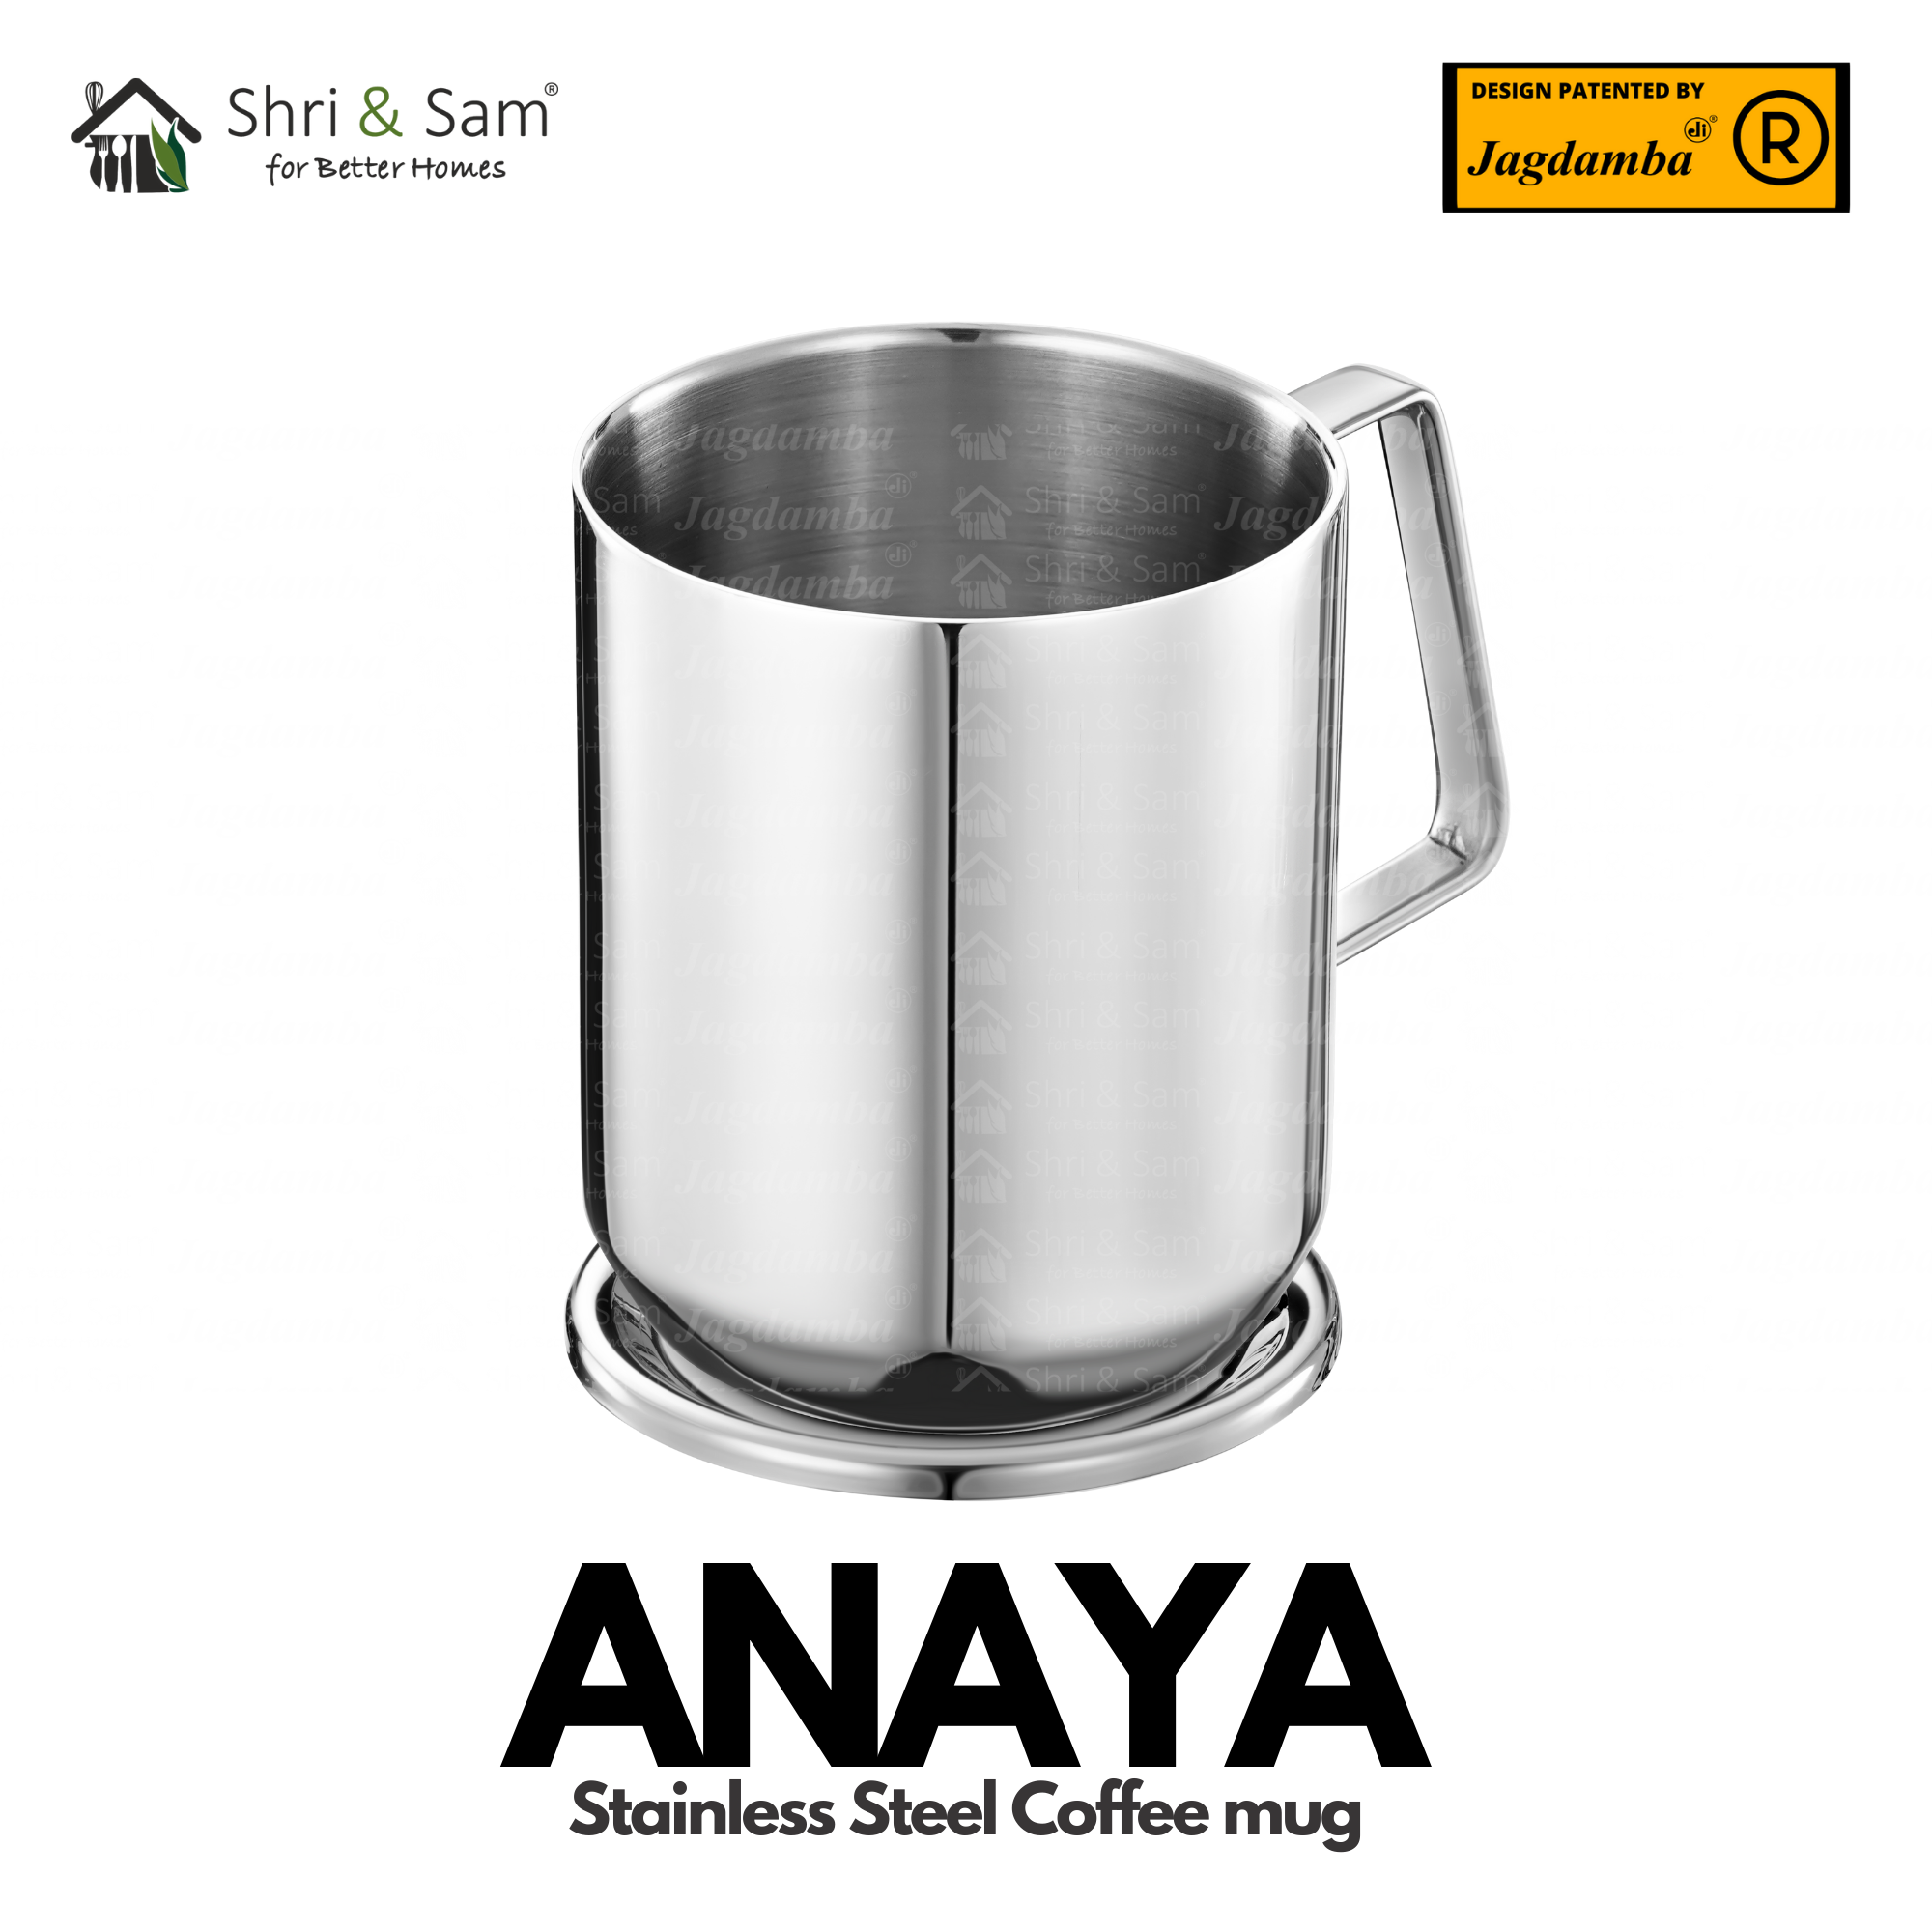 ANAYA stainless steel coffee mug